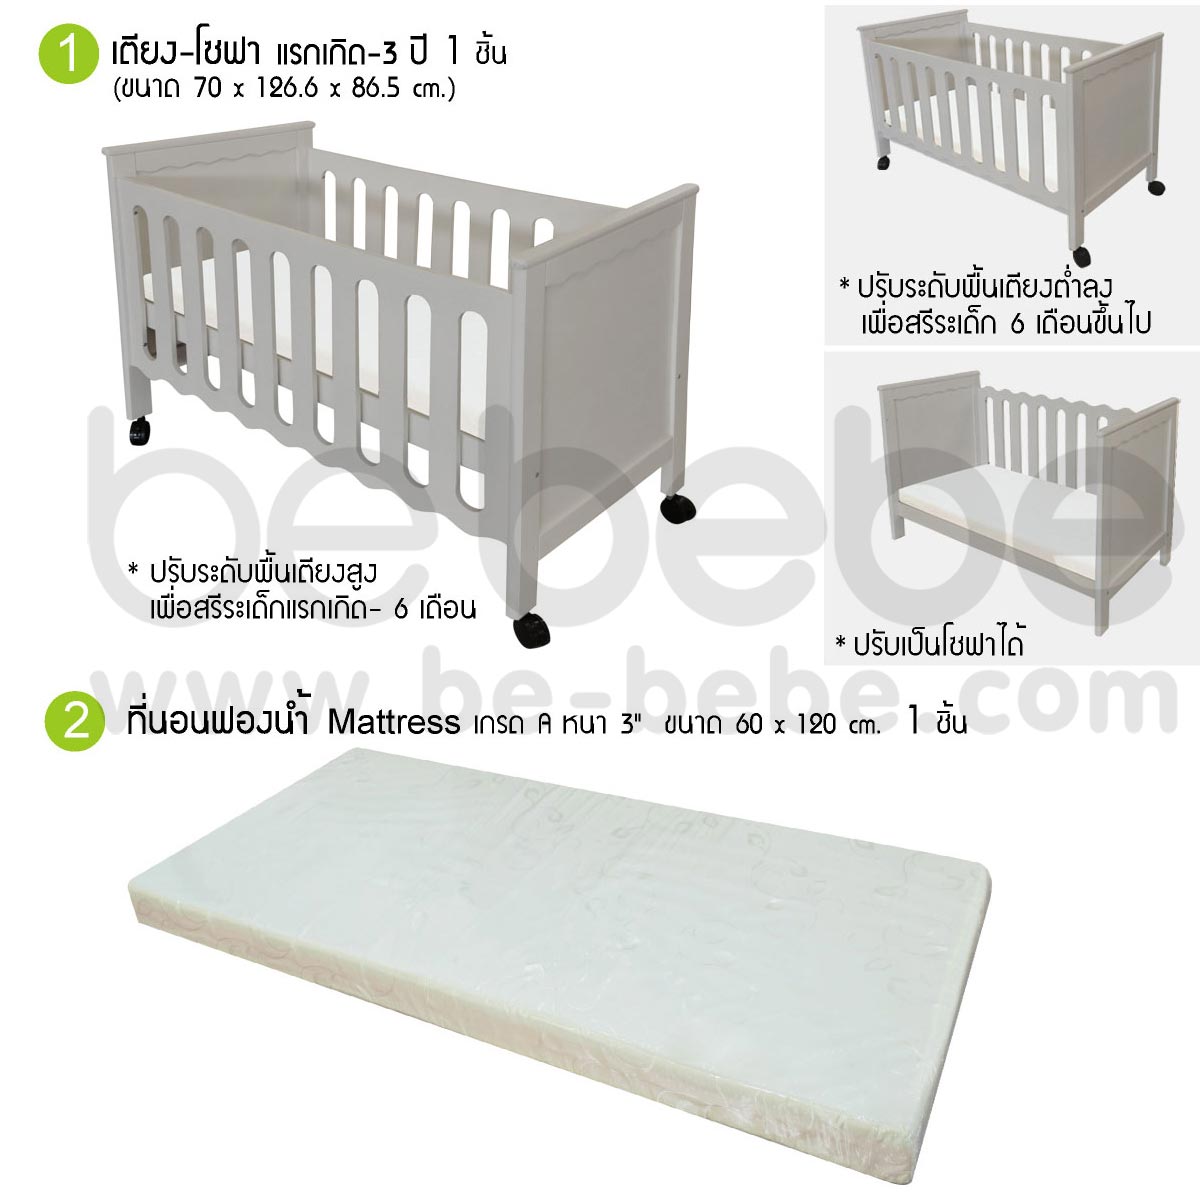 be bebe :ชุดเตียงเด็กแรกเกิด-3ปี (60x120)ปรับเป็นโซฟาได้+ที่นอนฟองน้ำ+ชุดเครื่องนอน+ตู้เสื้อผ้า+ตู้เตี้ย /เทา